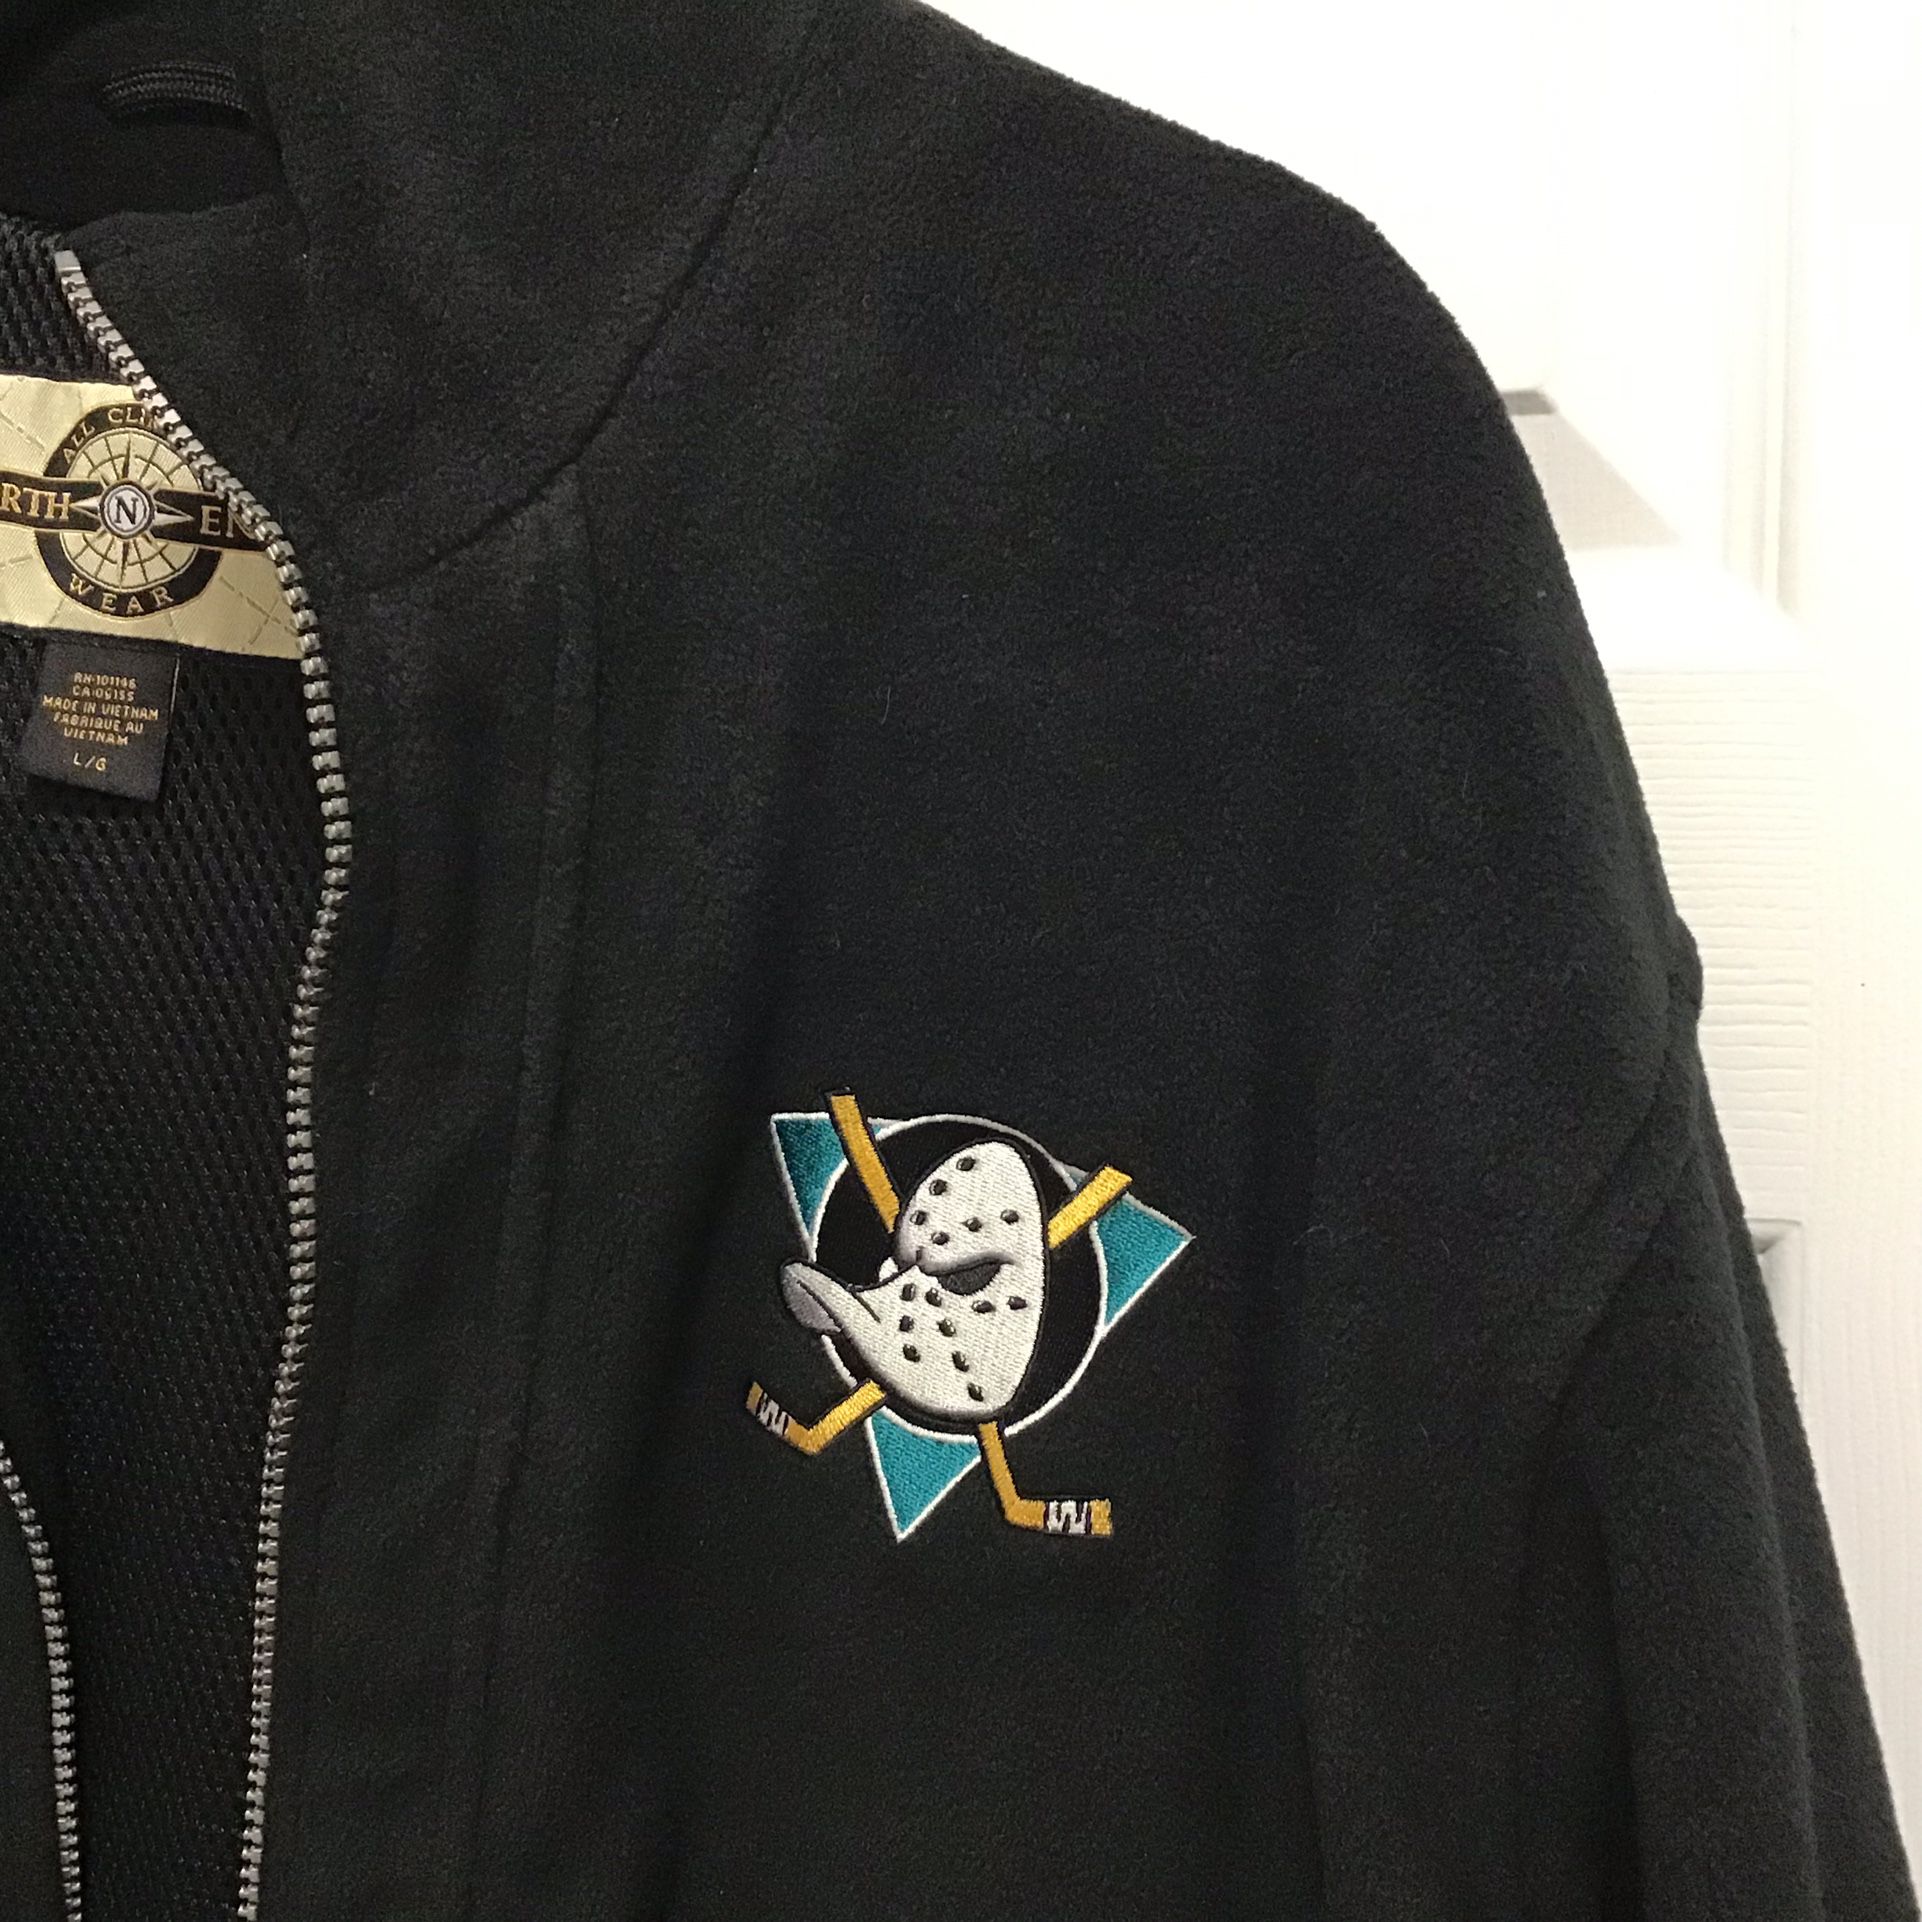 New ANAHEIM DUCKS Hockey NHL Fleece Jacket VINTAGE / Retro ($80+ retail) Merch SOUVENIR North End RARE Size L